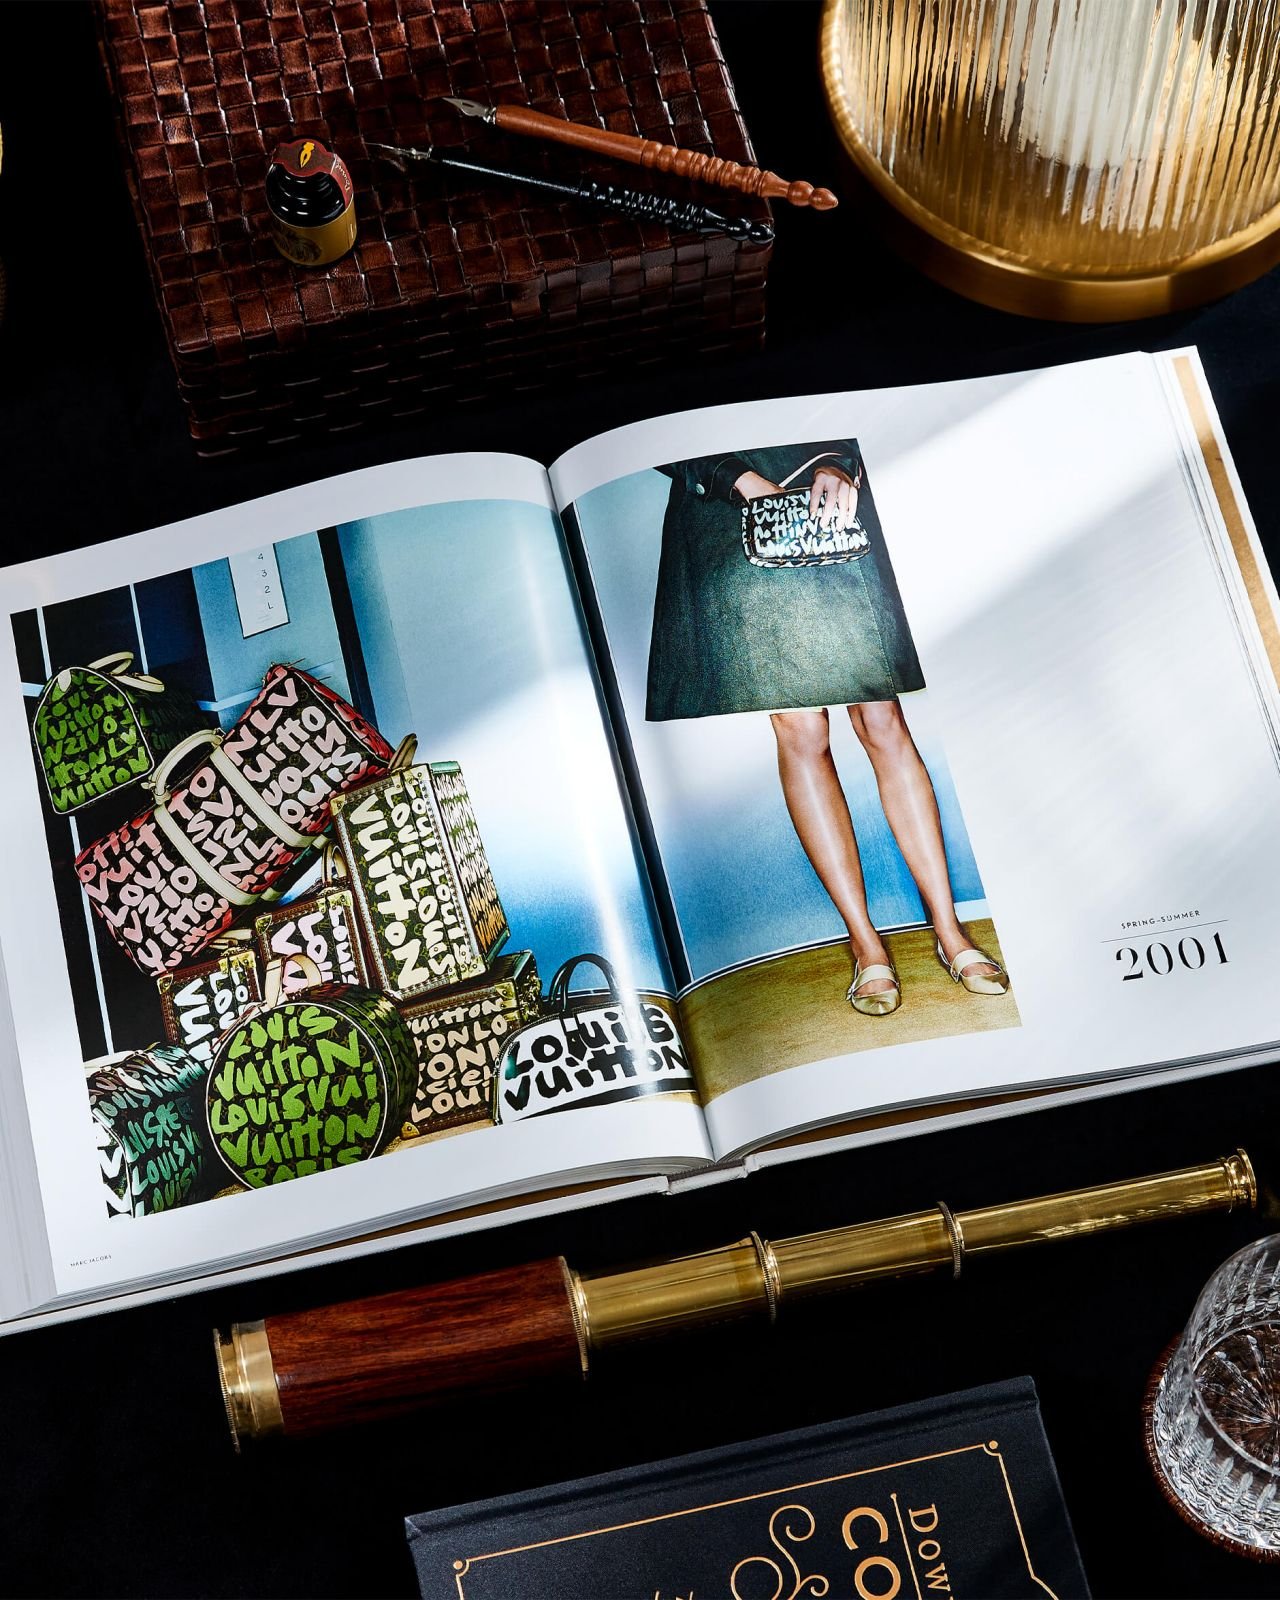 Louis Vuitton Marc Jacobs Book by Pamela Golbin